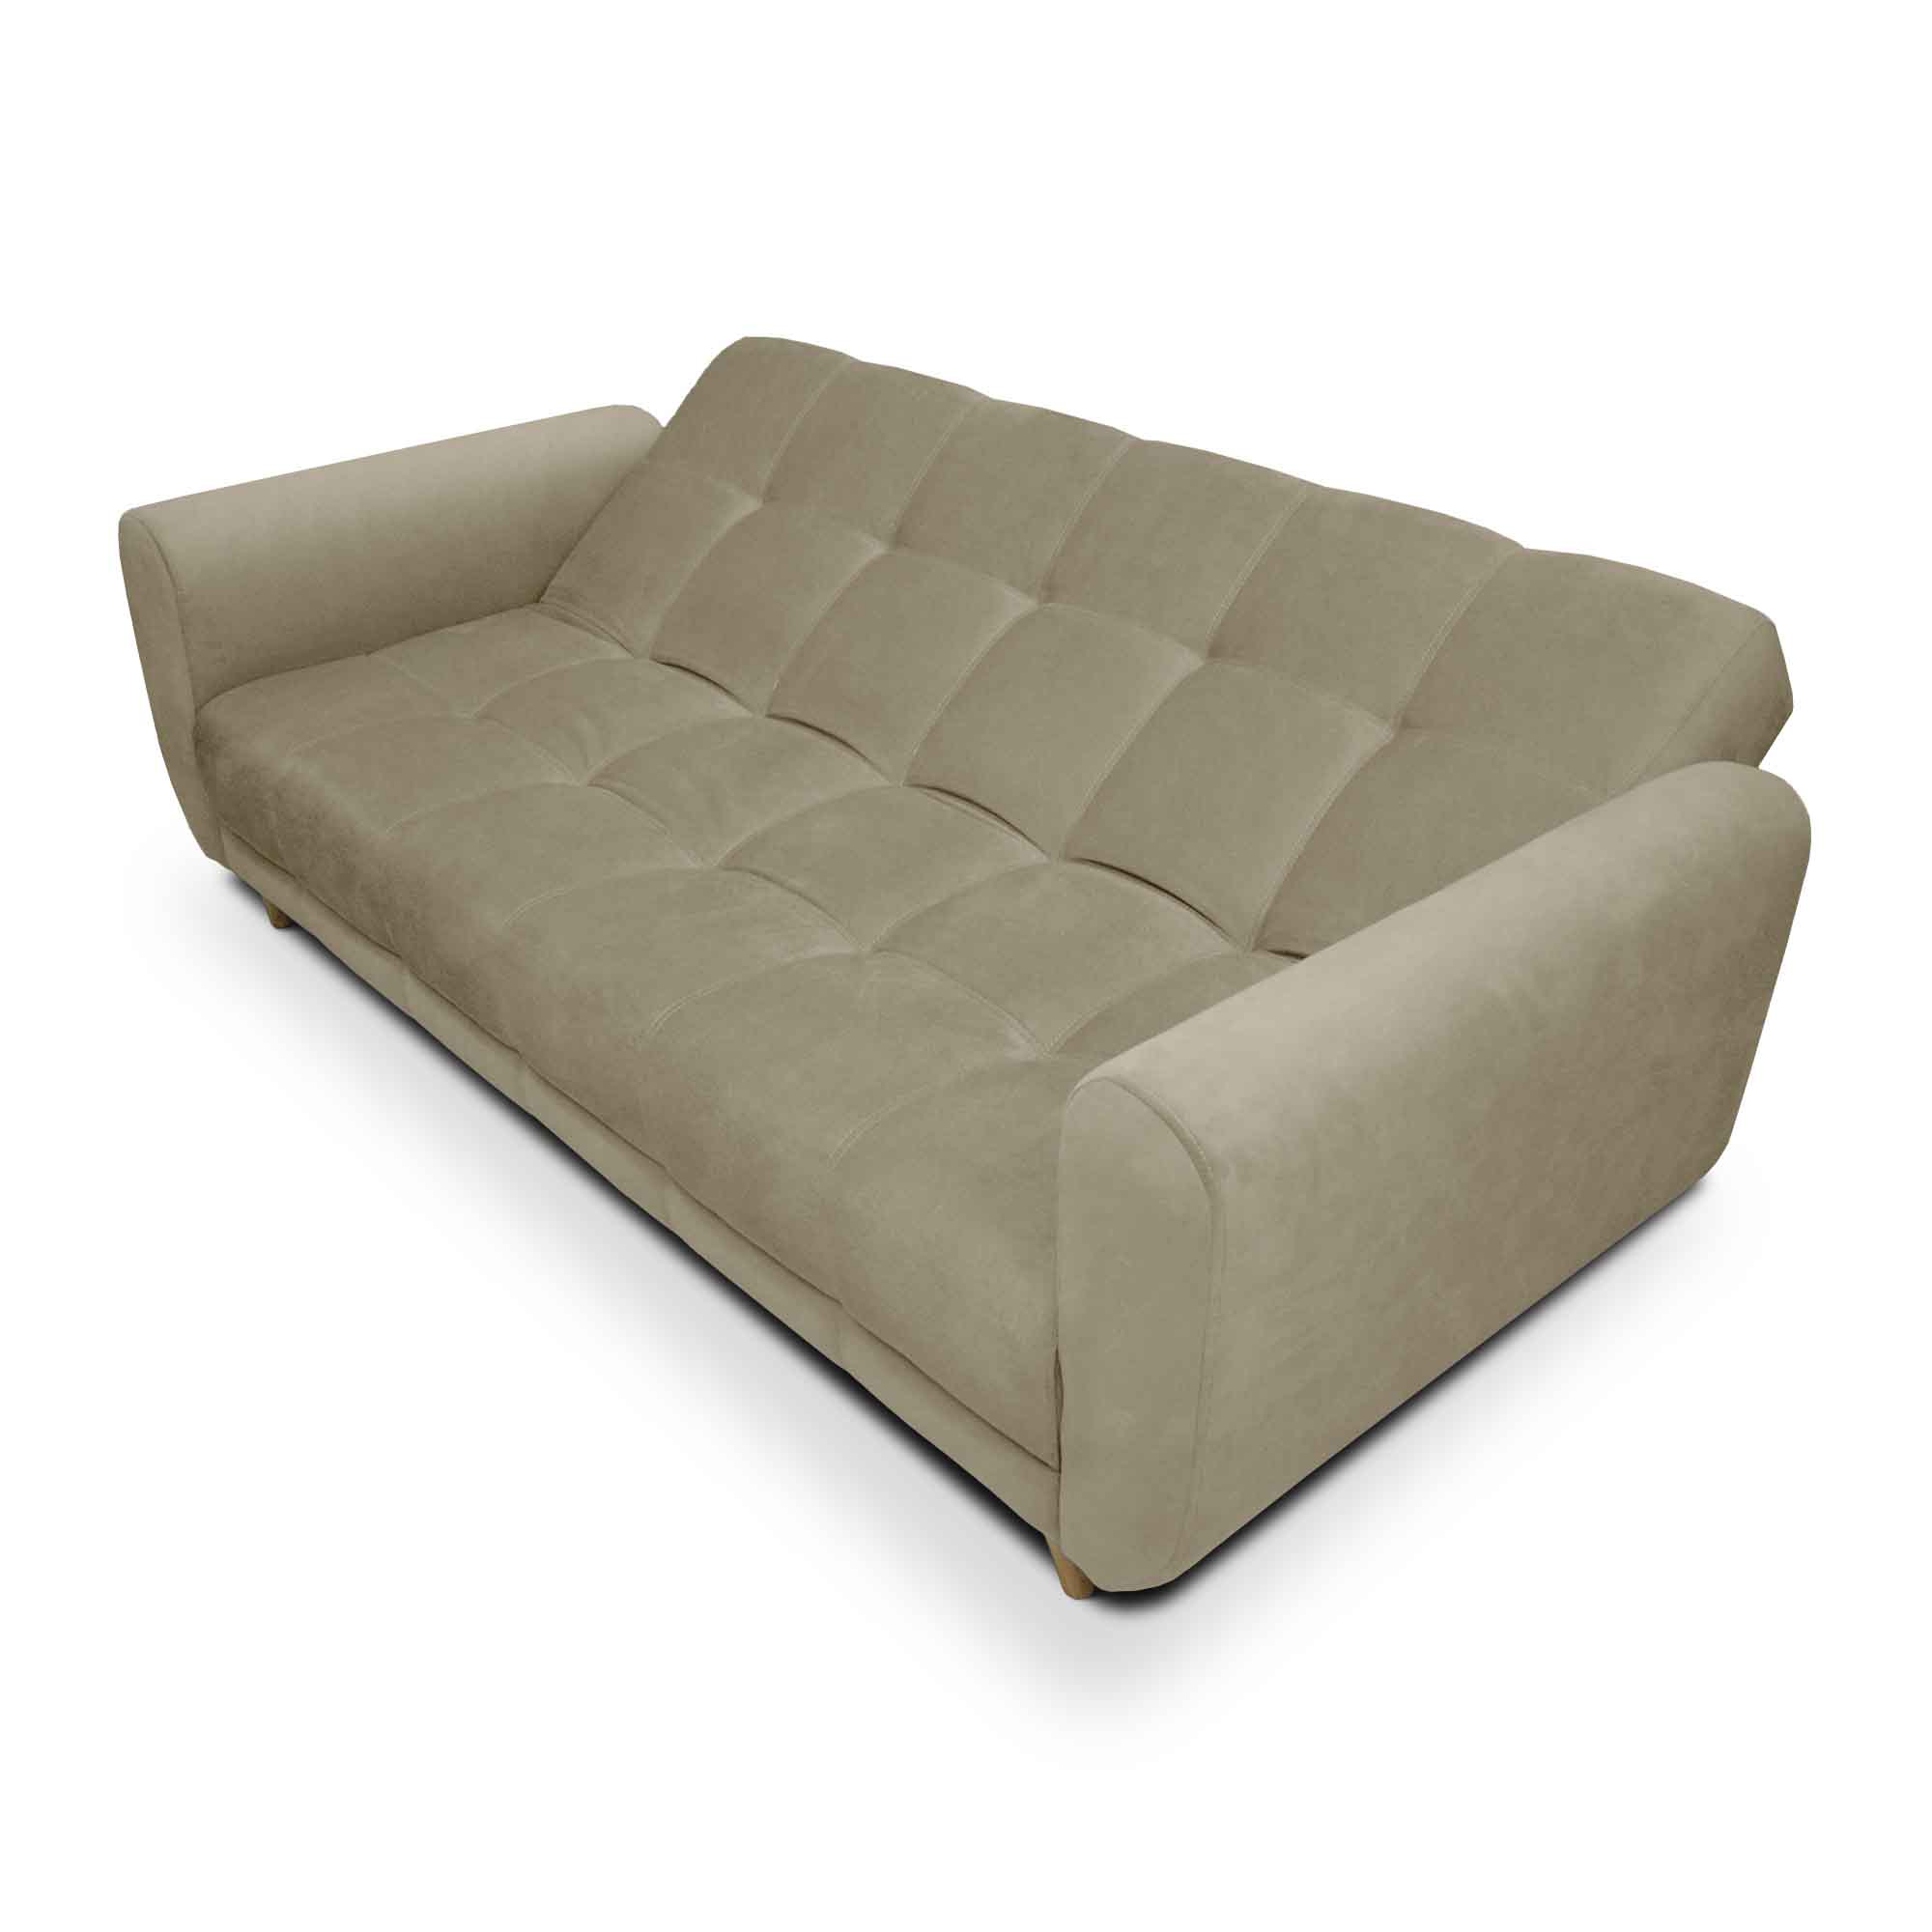 Sofa Cama Comfort Sistema Clic Clac Color Beige